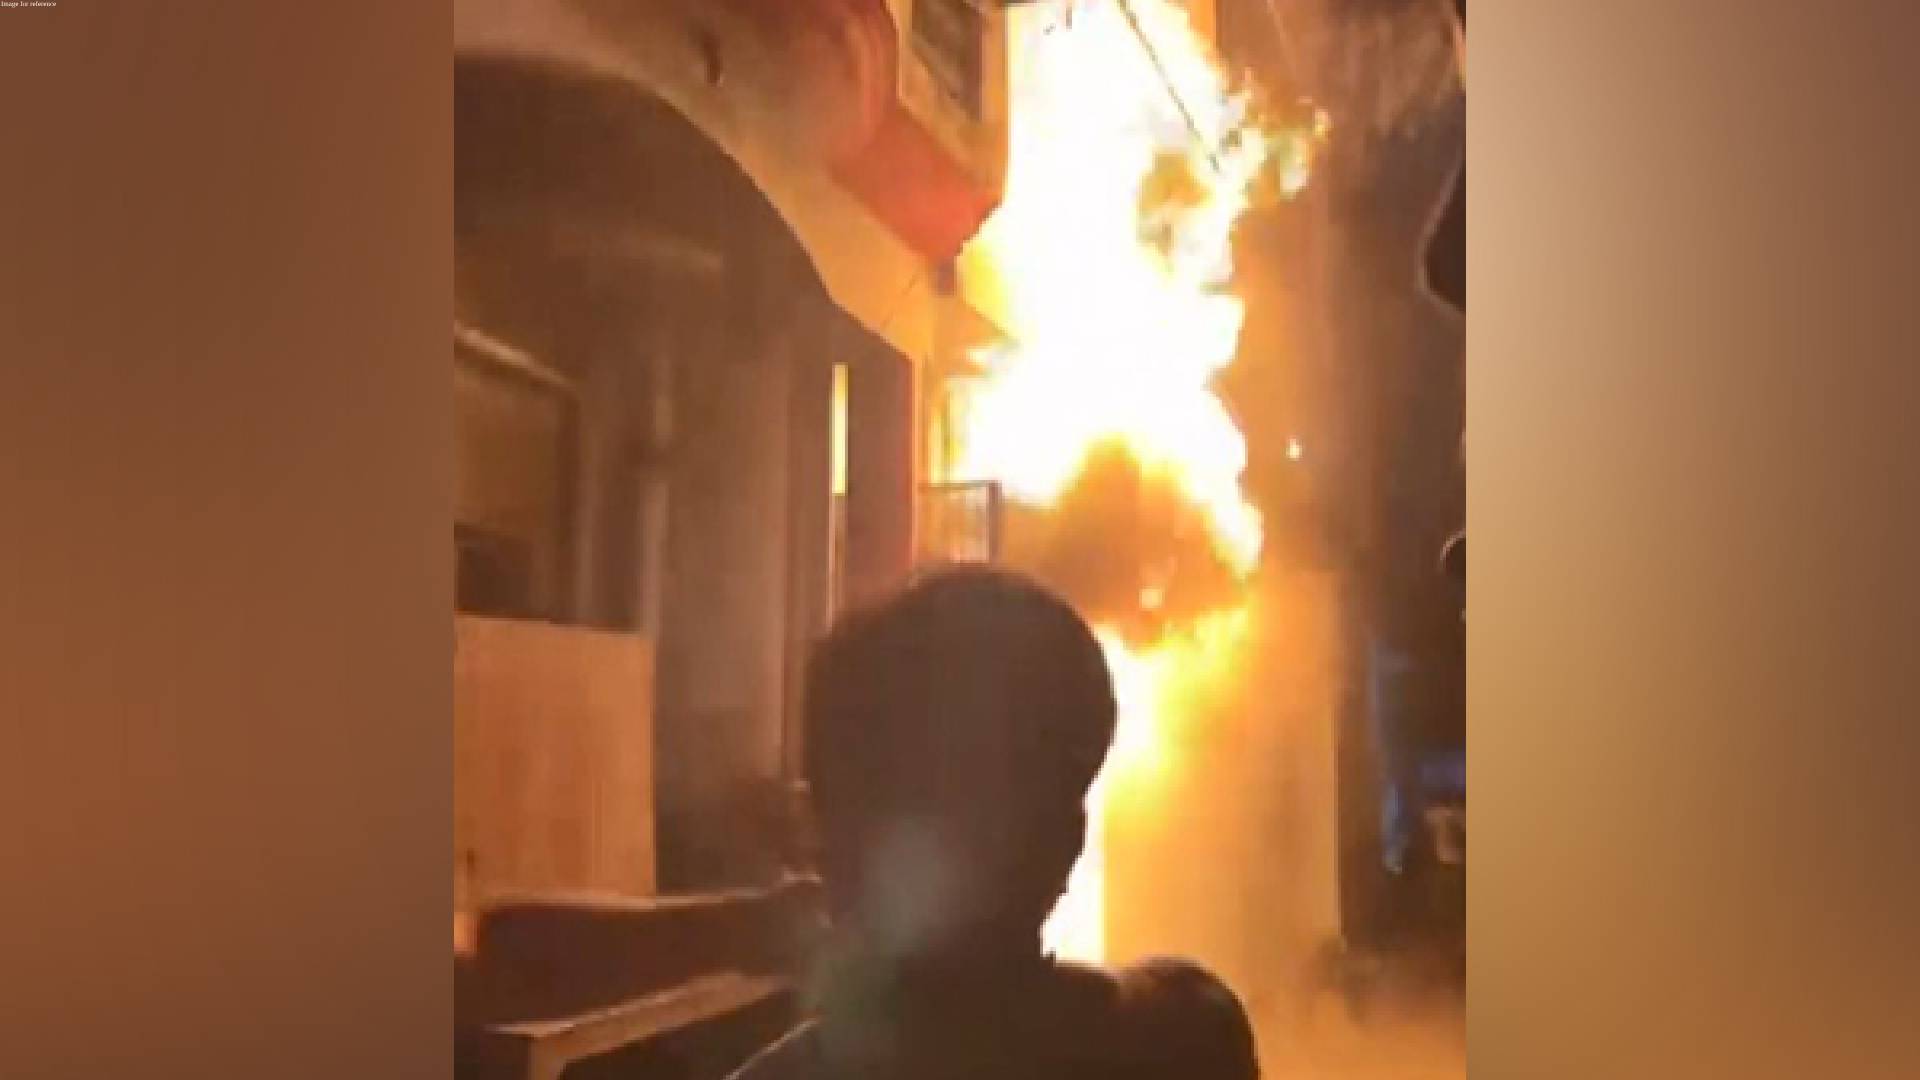 Fire breaks out in a house in Uttar Pradesh's Raebareli, five people injured